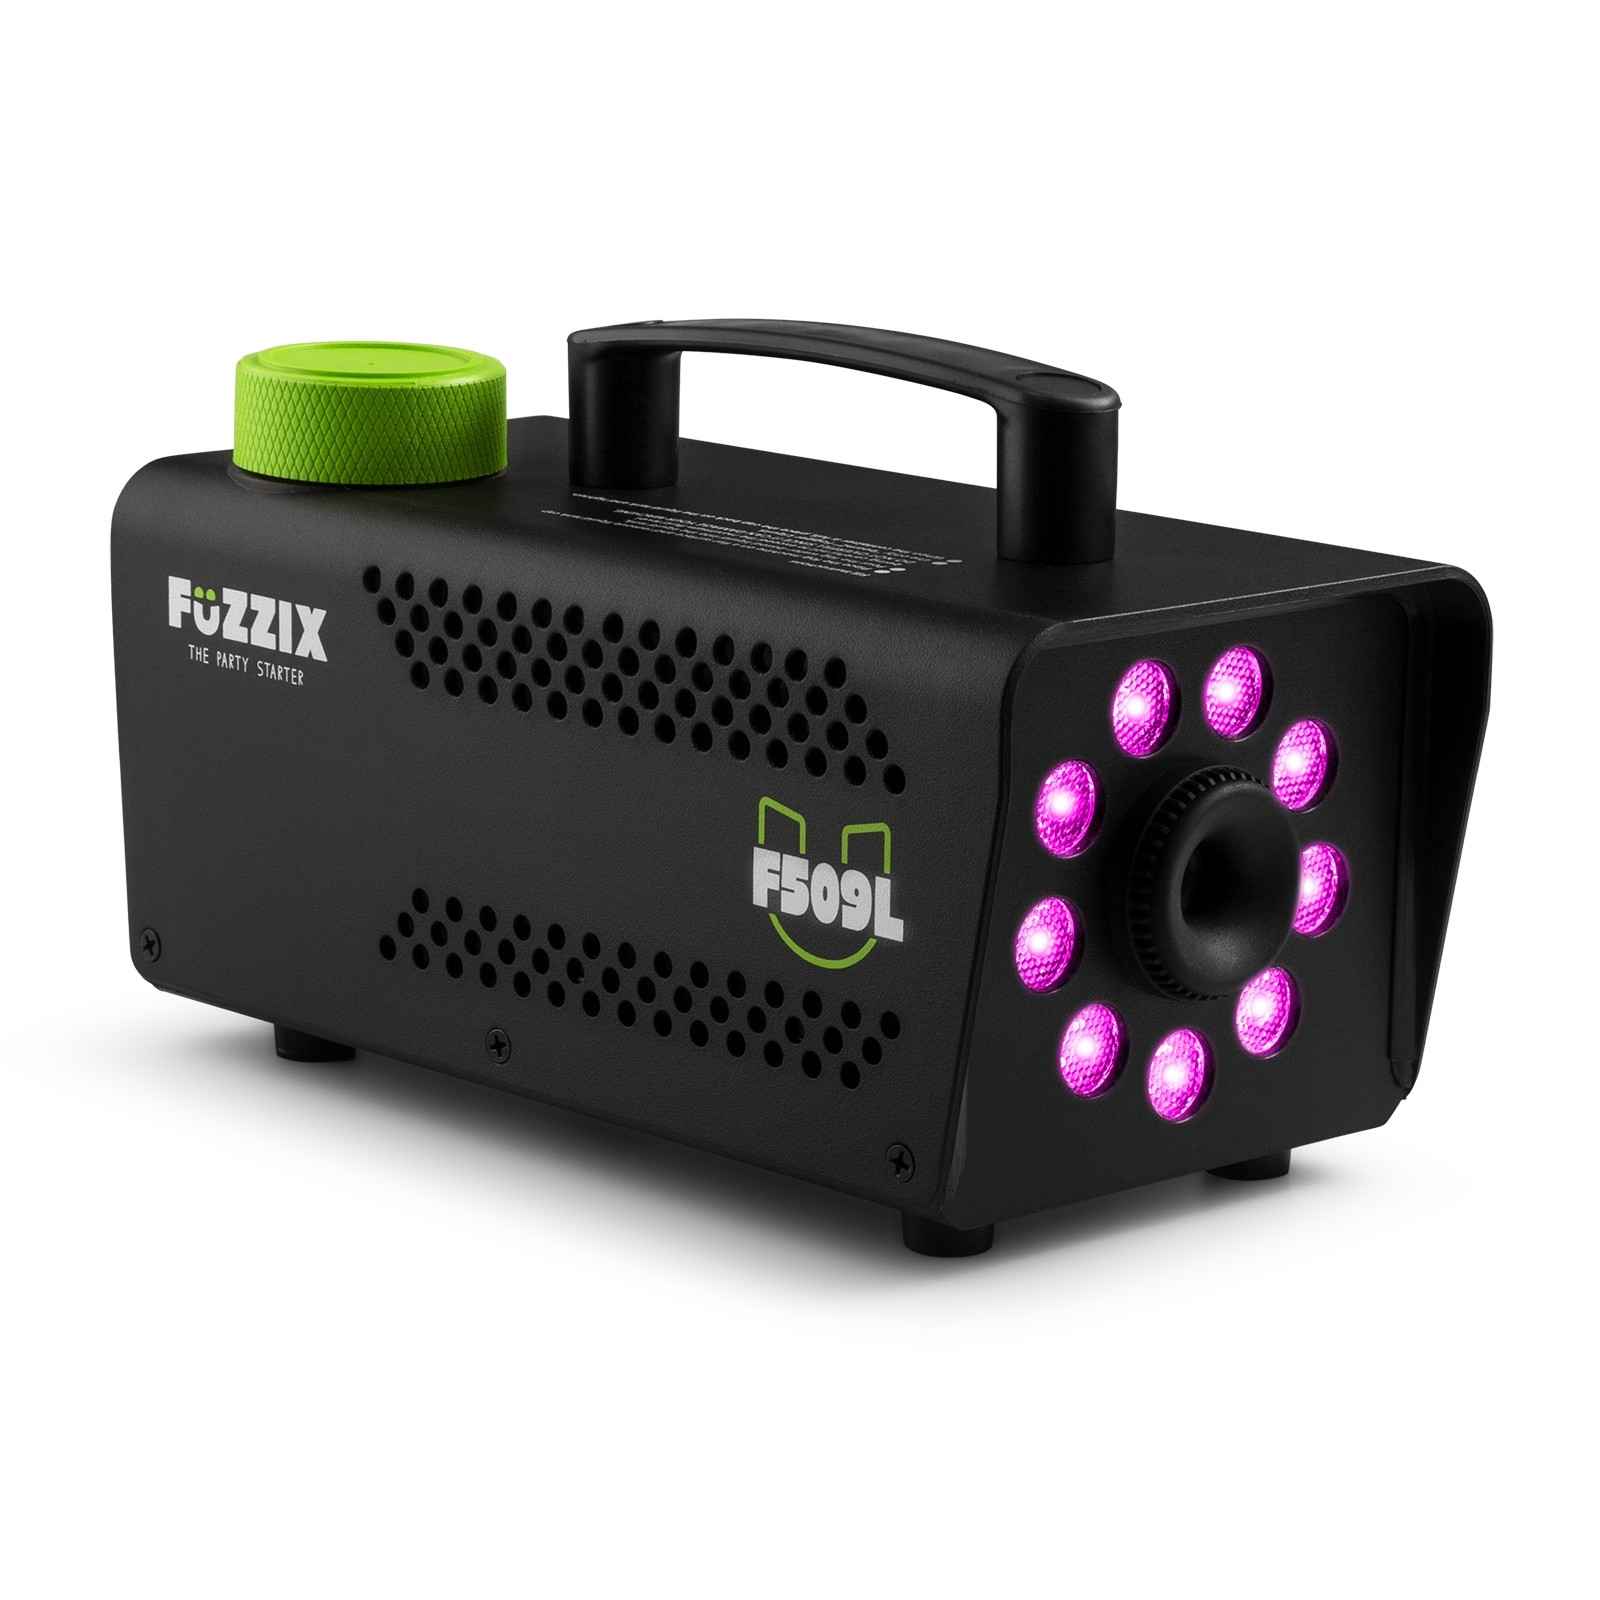 FuZZIX F509L Μηχανή Καπνού 500 Watt Party Smoke Machine με Ασύρματο χειριστήριο, 9x RGB LEDs και Υγρό 160.310 (Μαύρη)